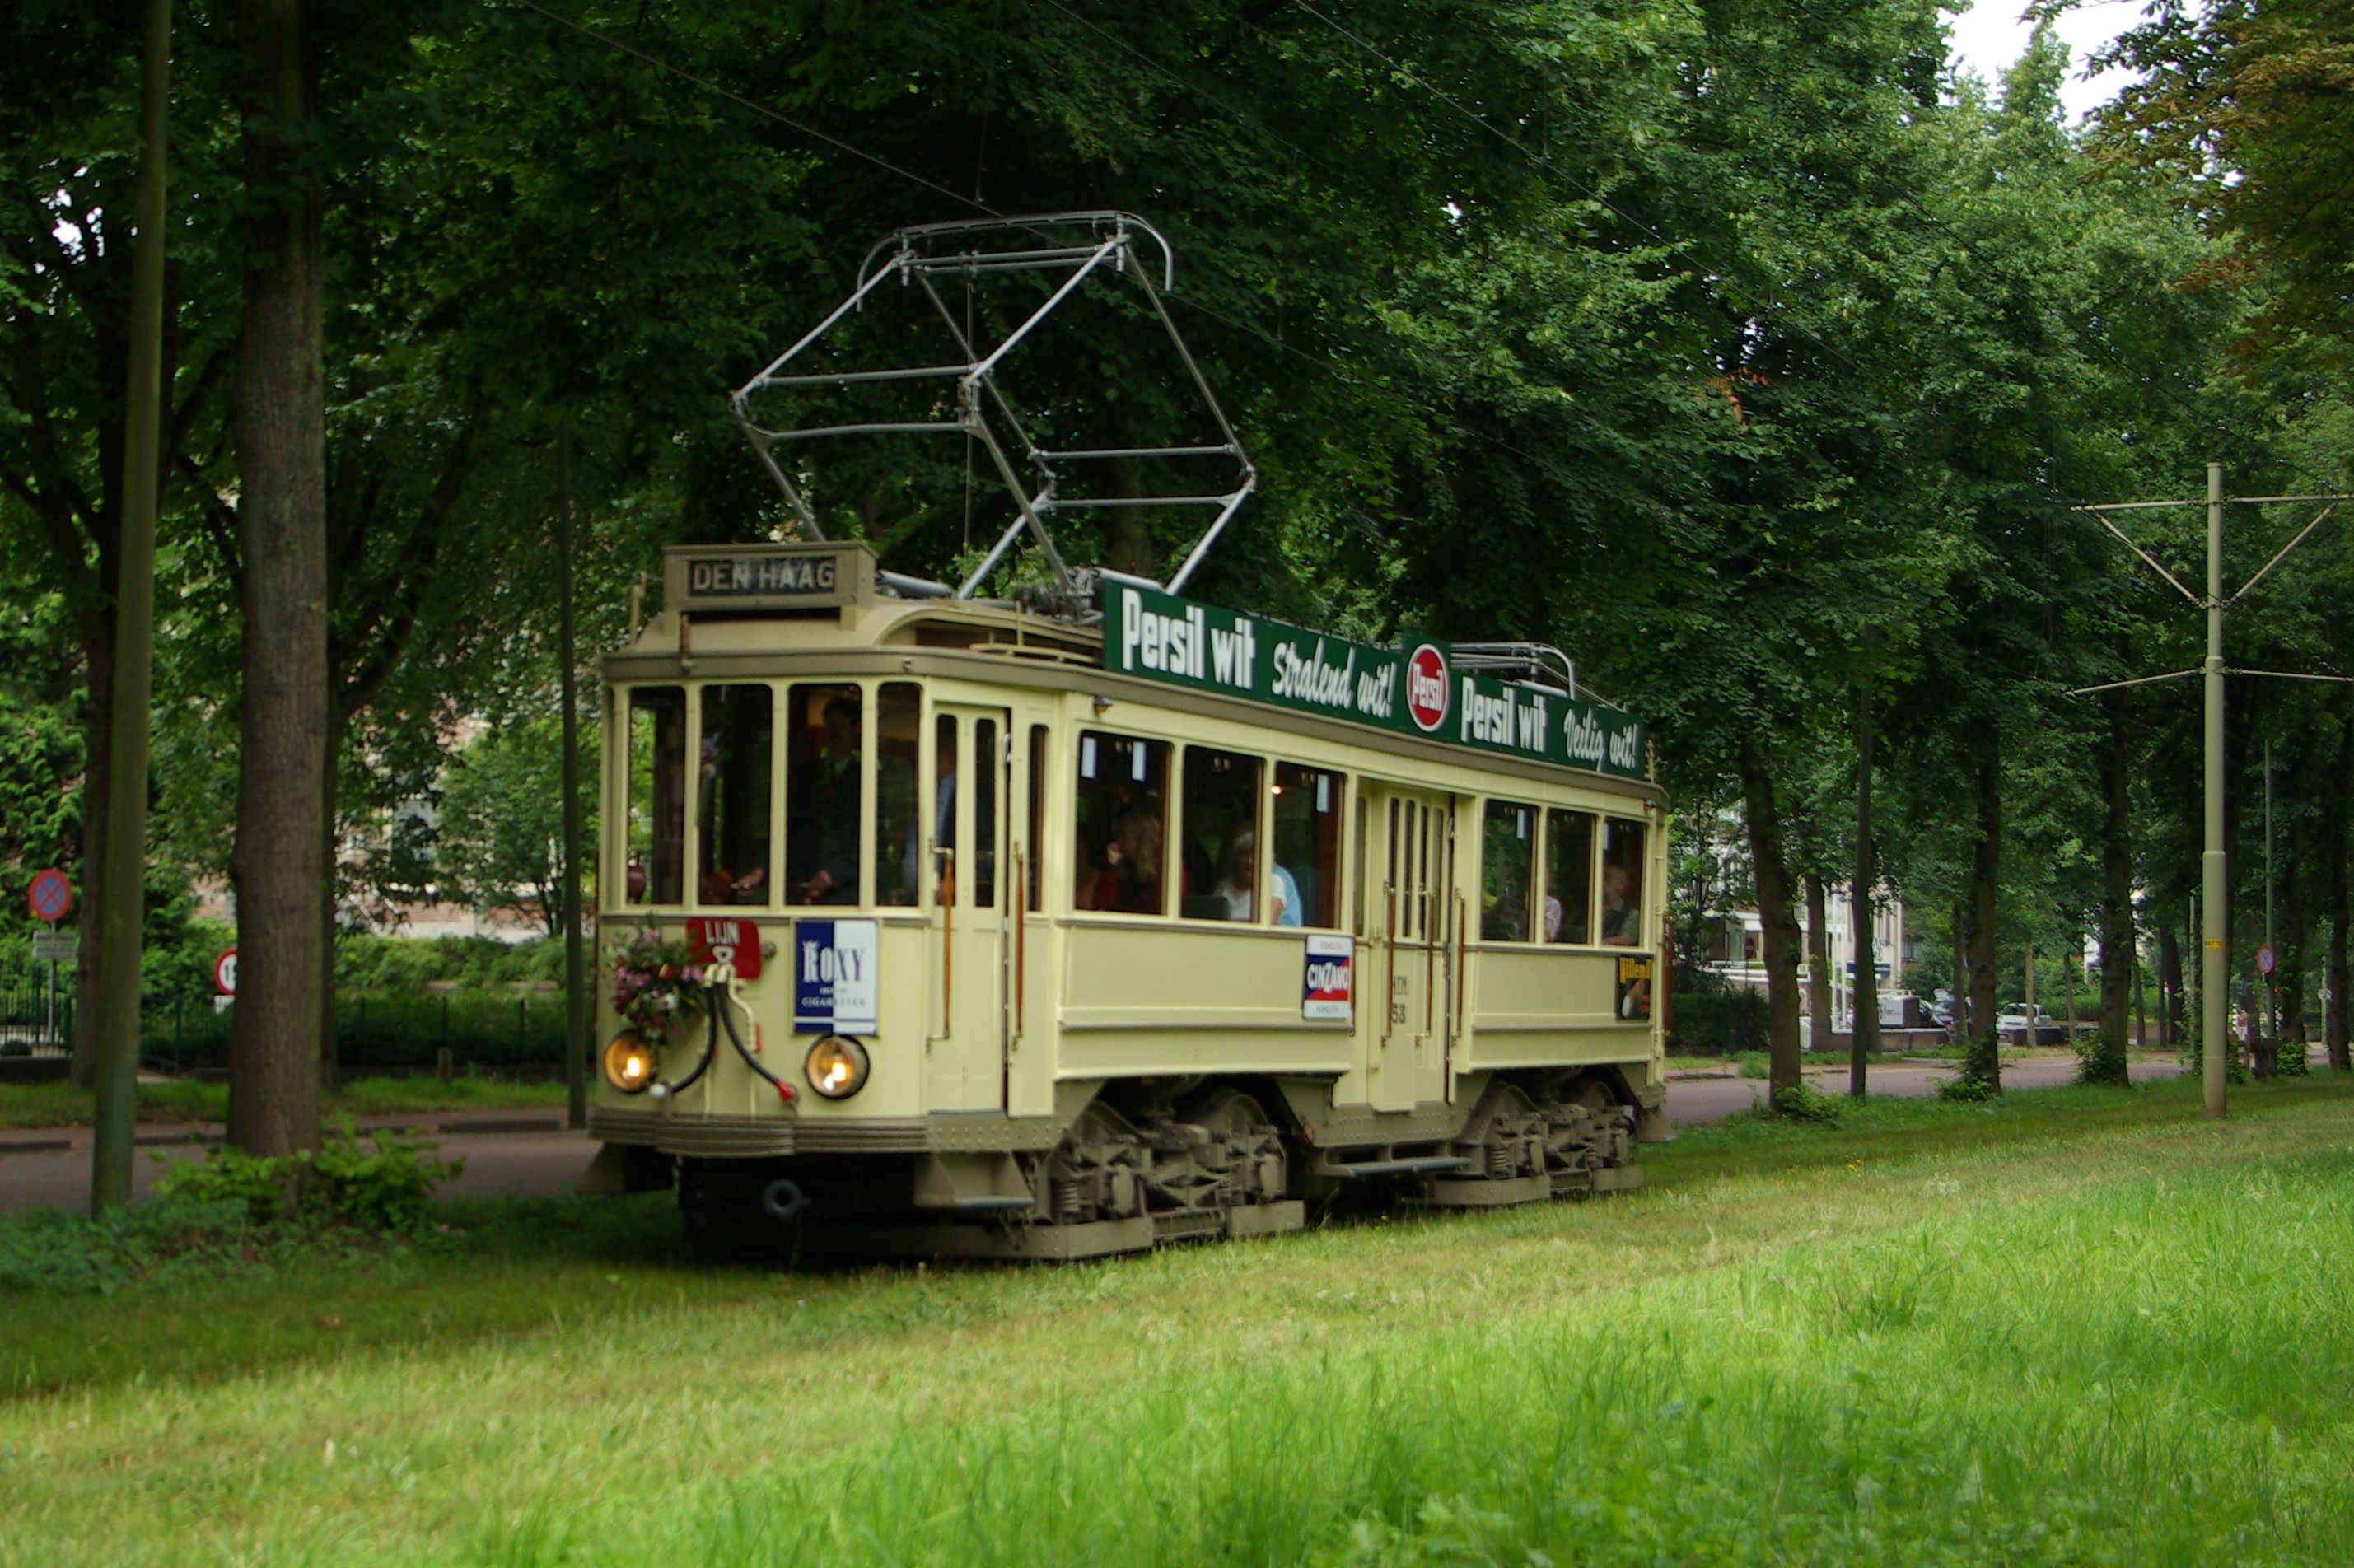 Hague 58 tram